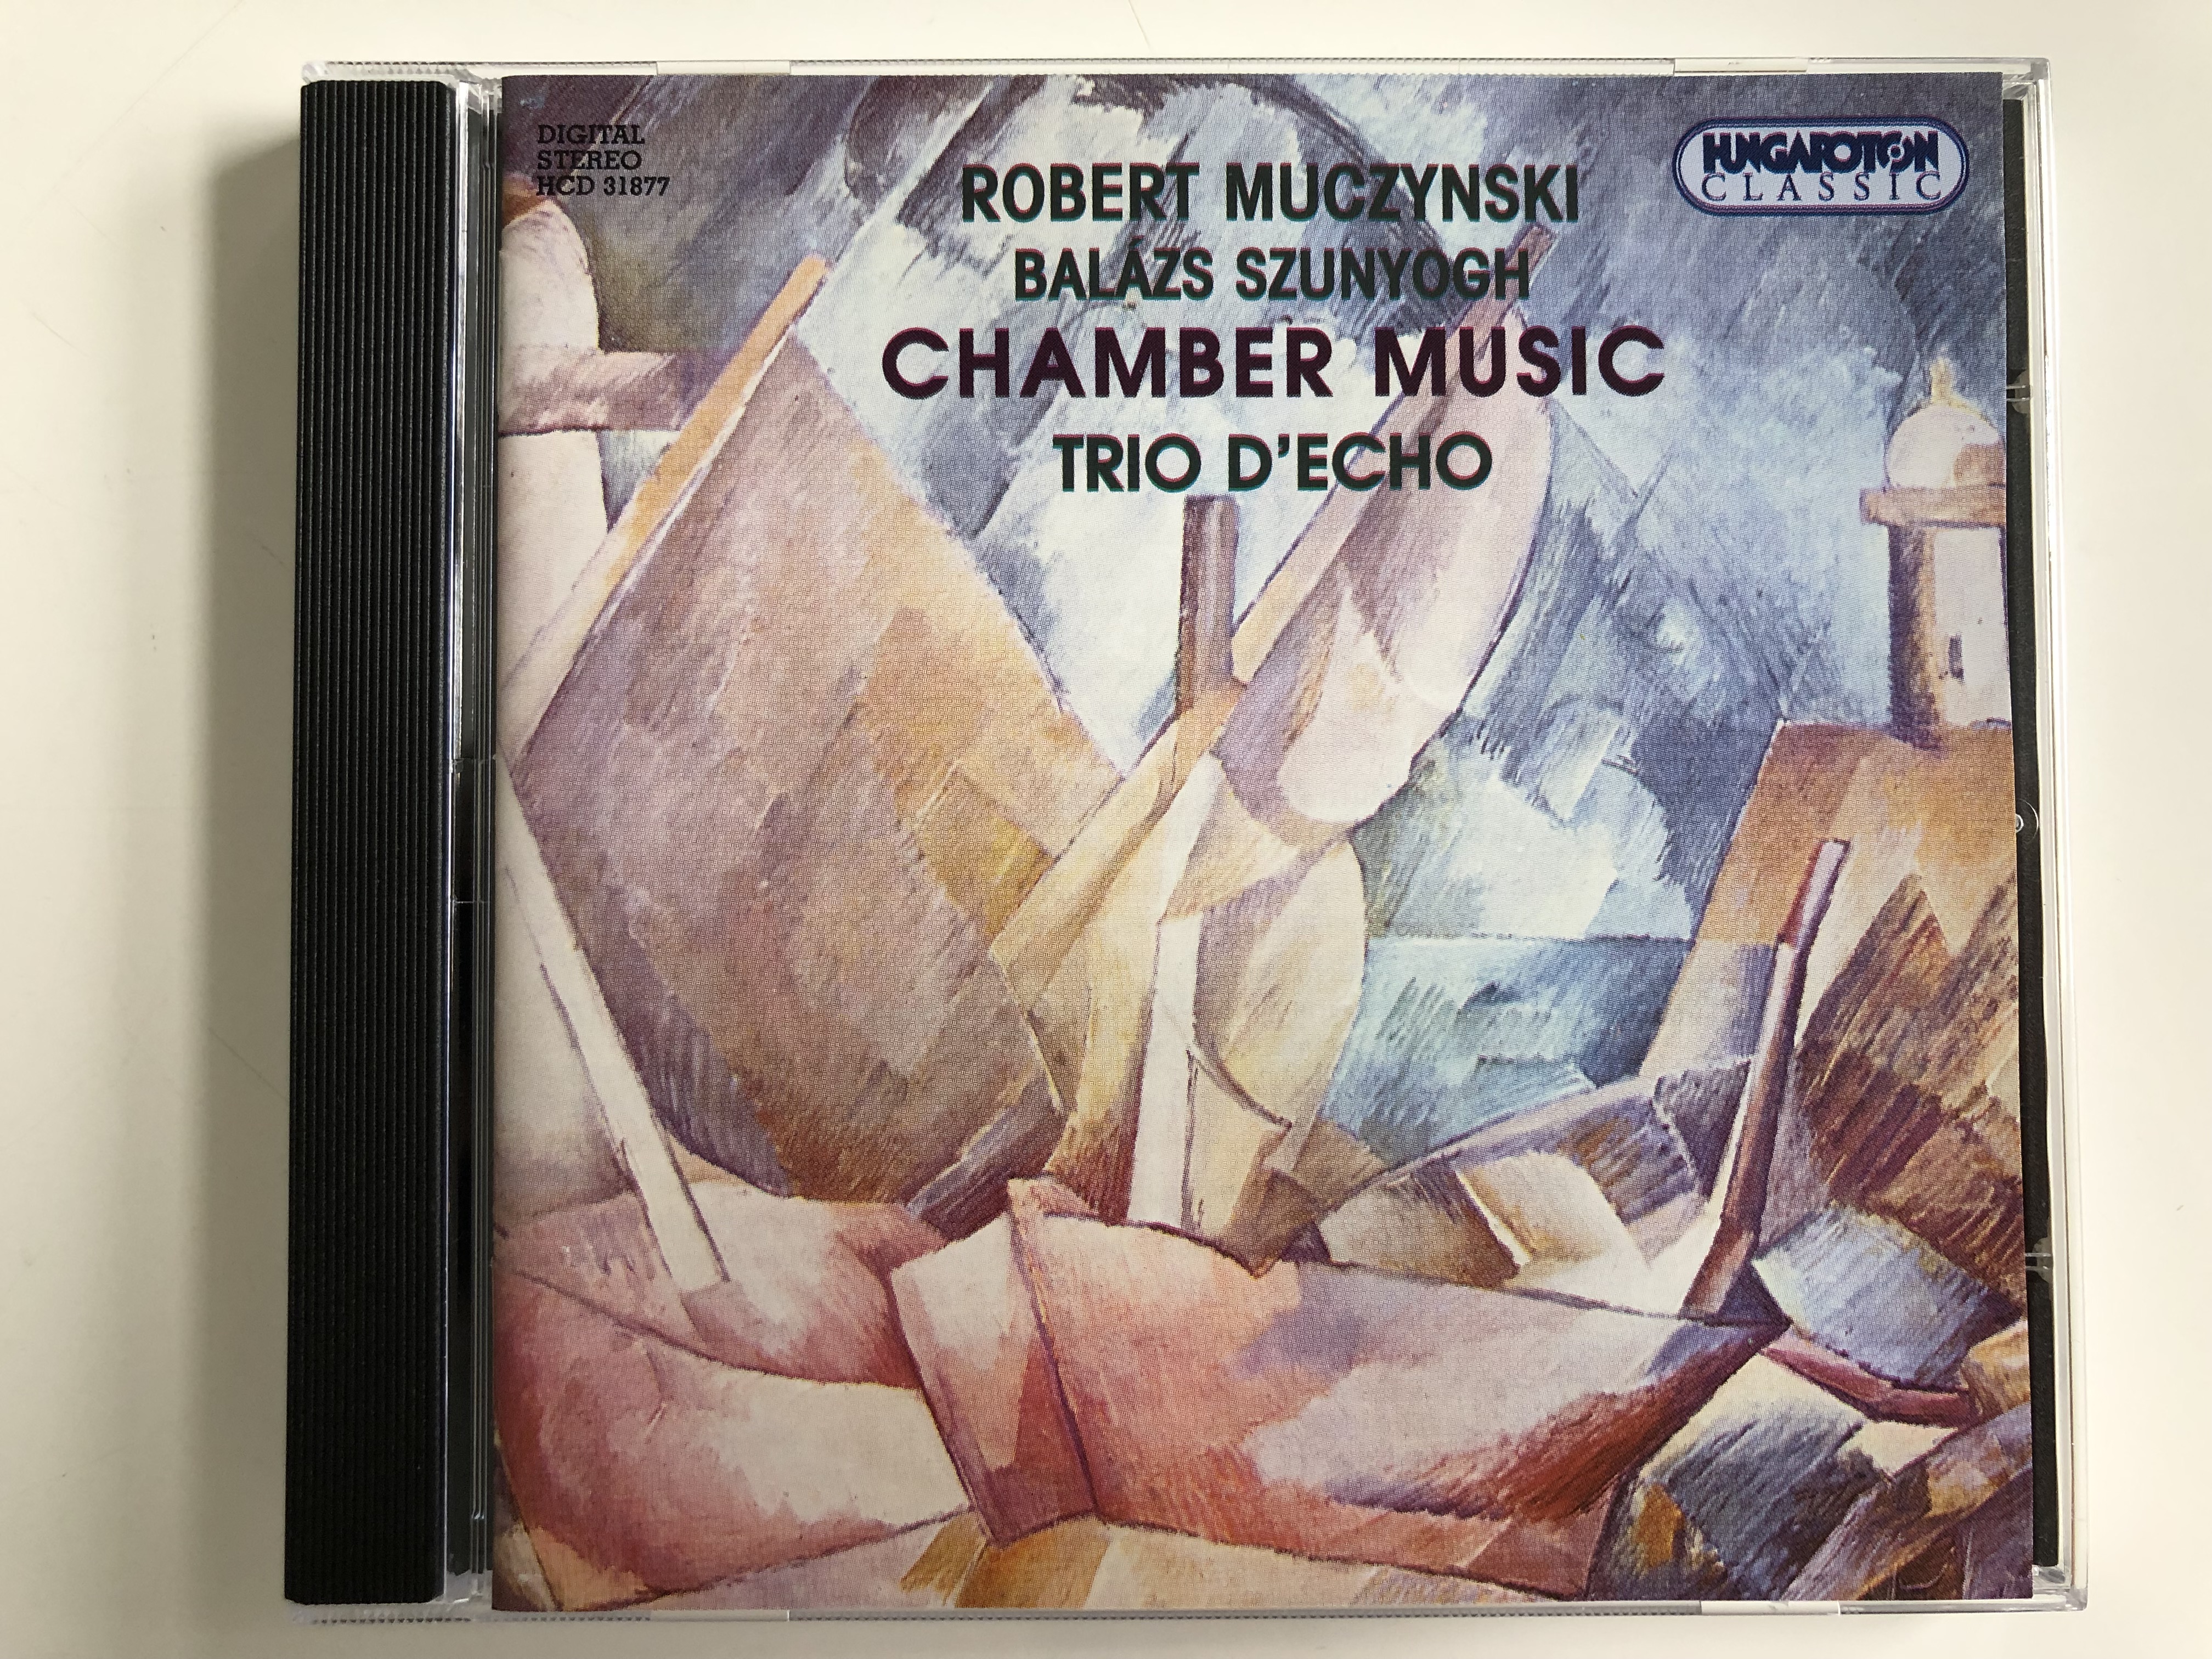 robert-muczynski-balazs-szunyogh-chamber-music-trio-d-echo-hungaroton-audio-cd-2000-stereo-hcd-31877-1-.jpg